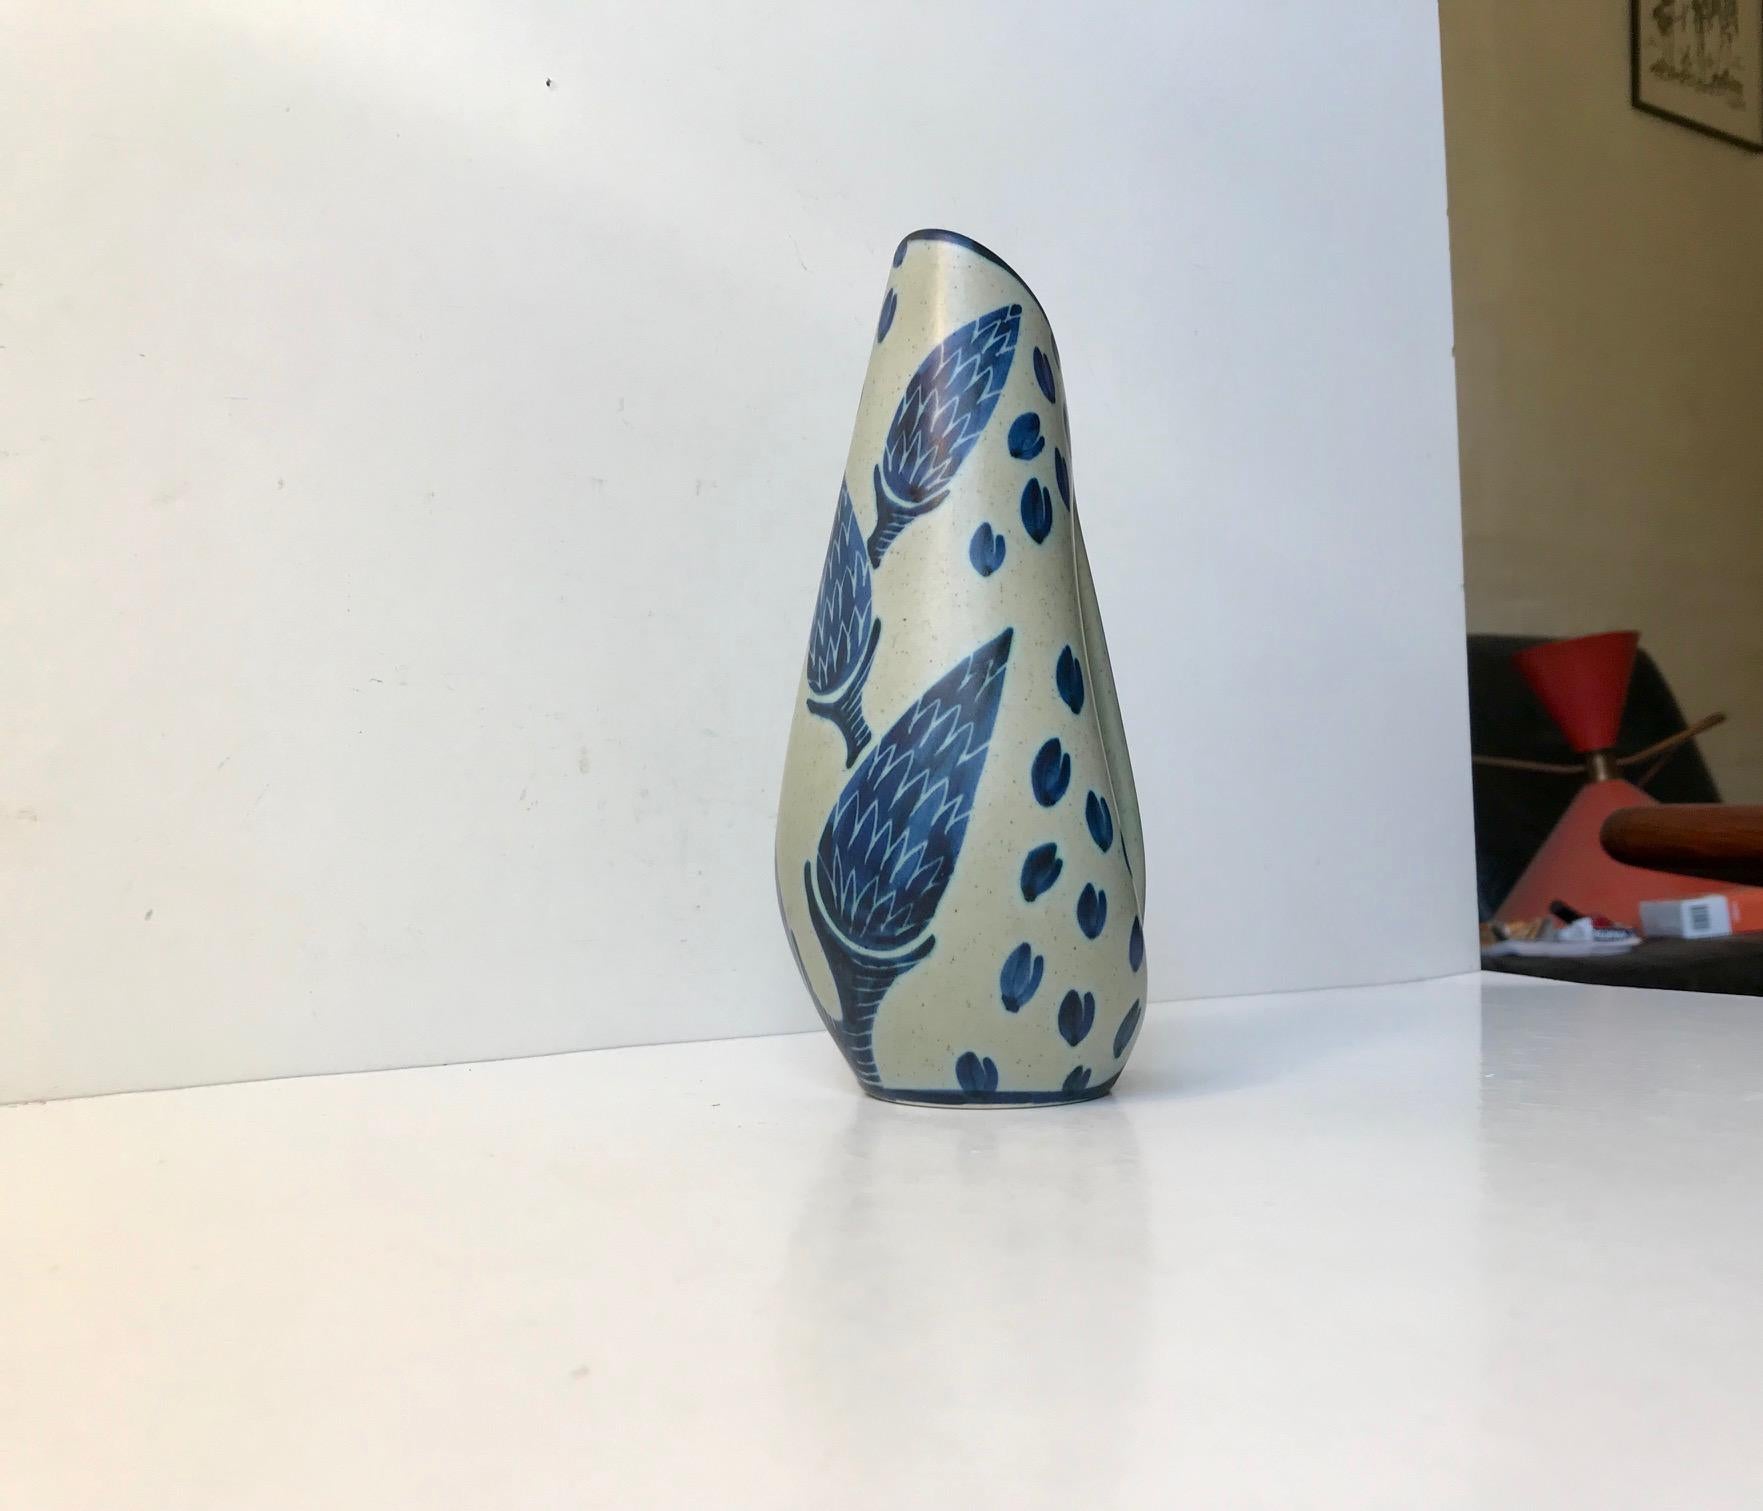 Glazed Danish Modernist Ceramic Jug Vase by Einar Johansen for Søholm, 1960s